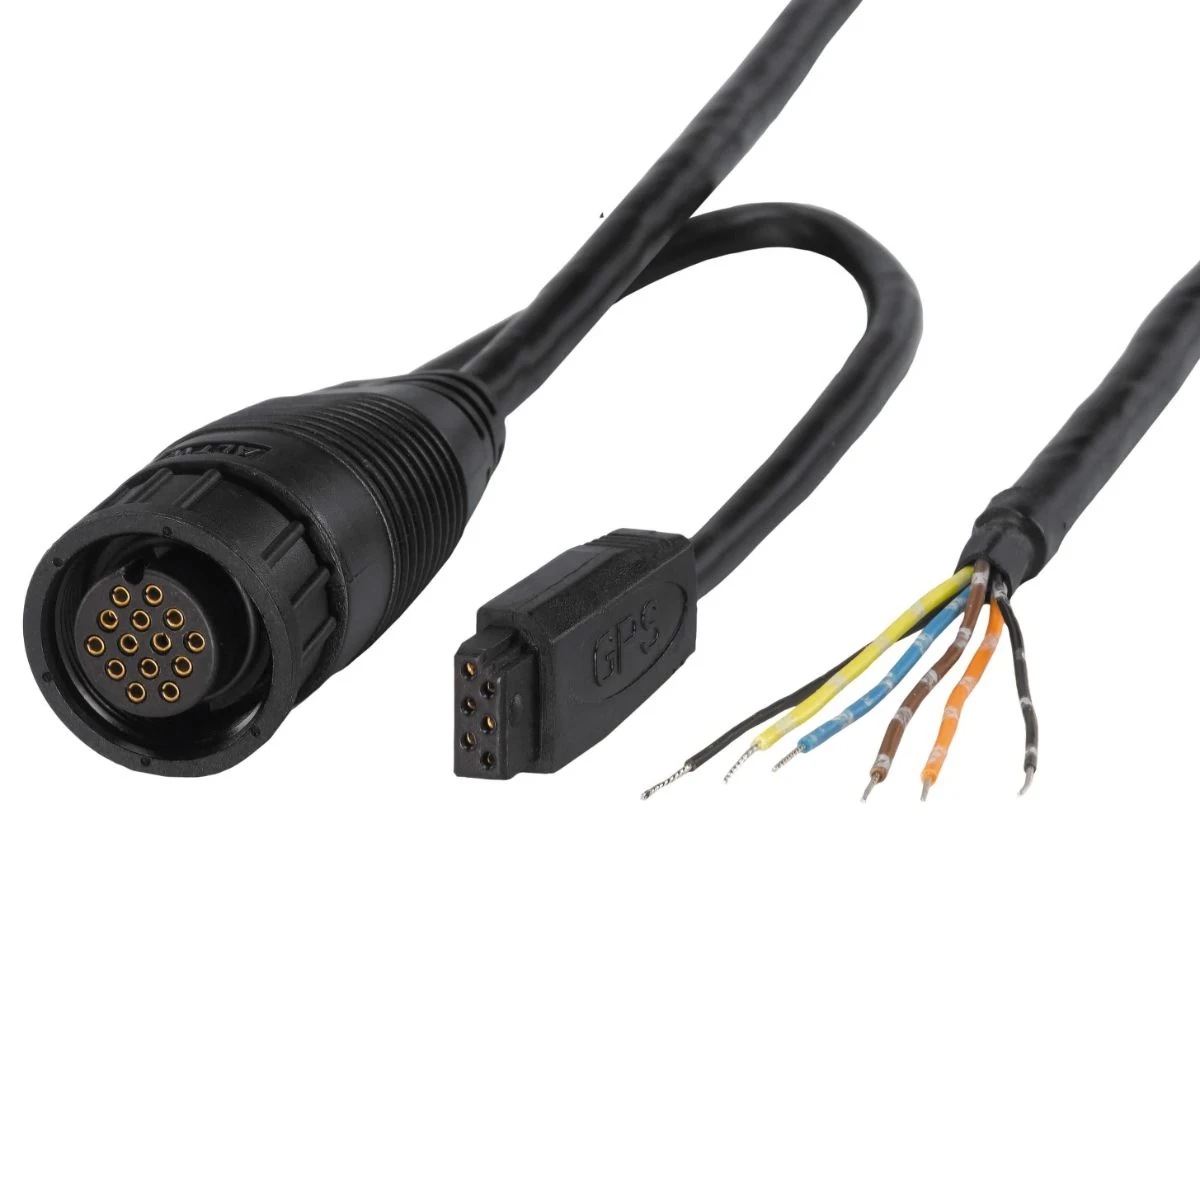 AS GPS NMEA - NMEA 0183 Splitter Cable